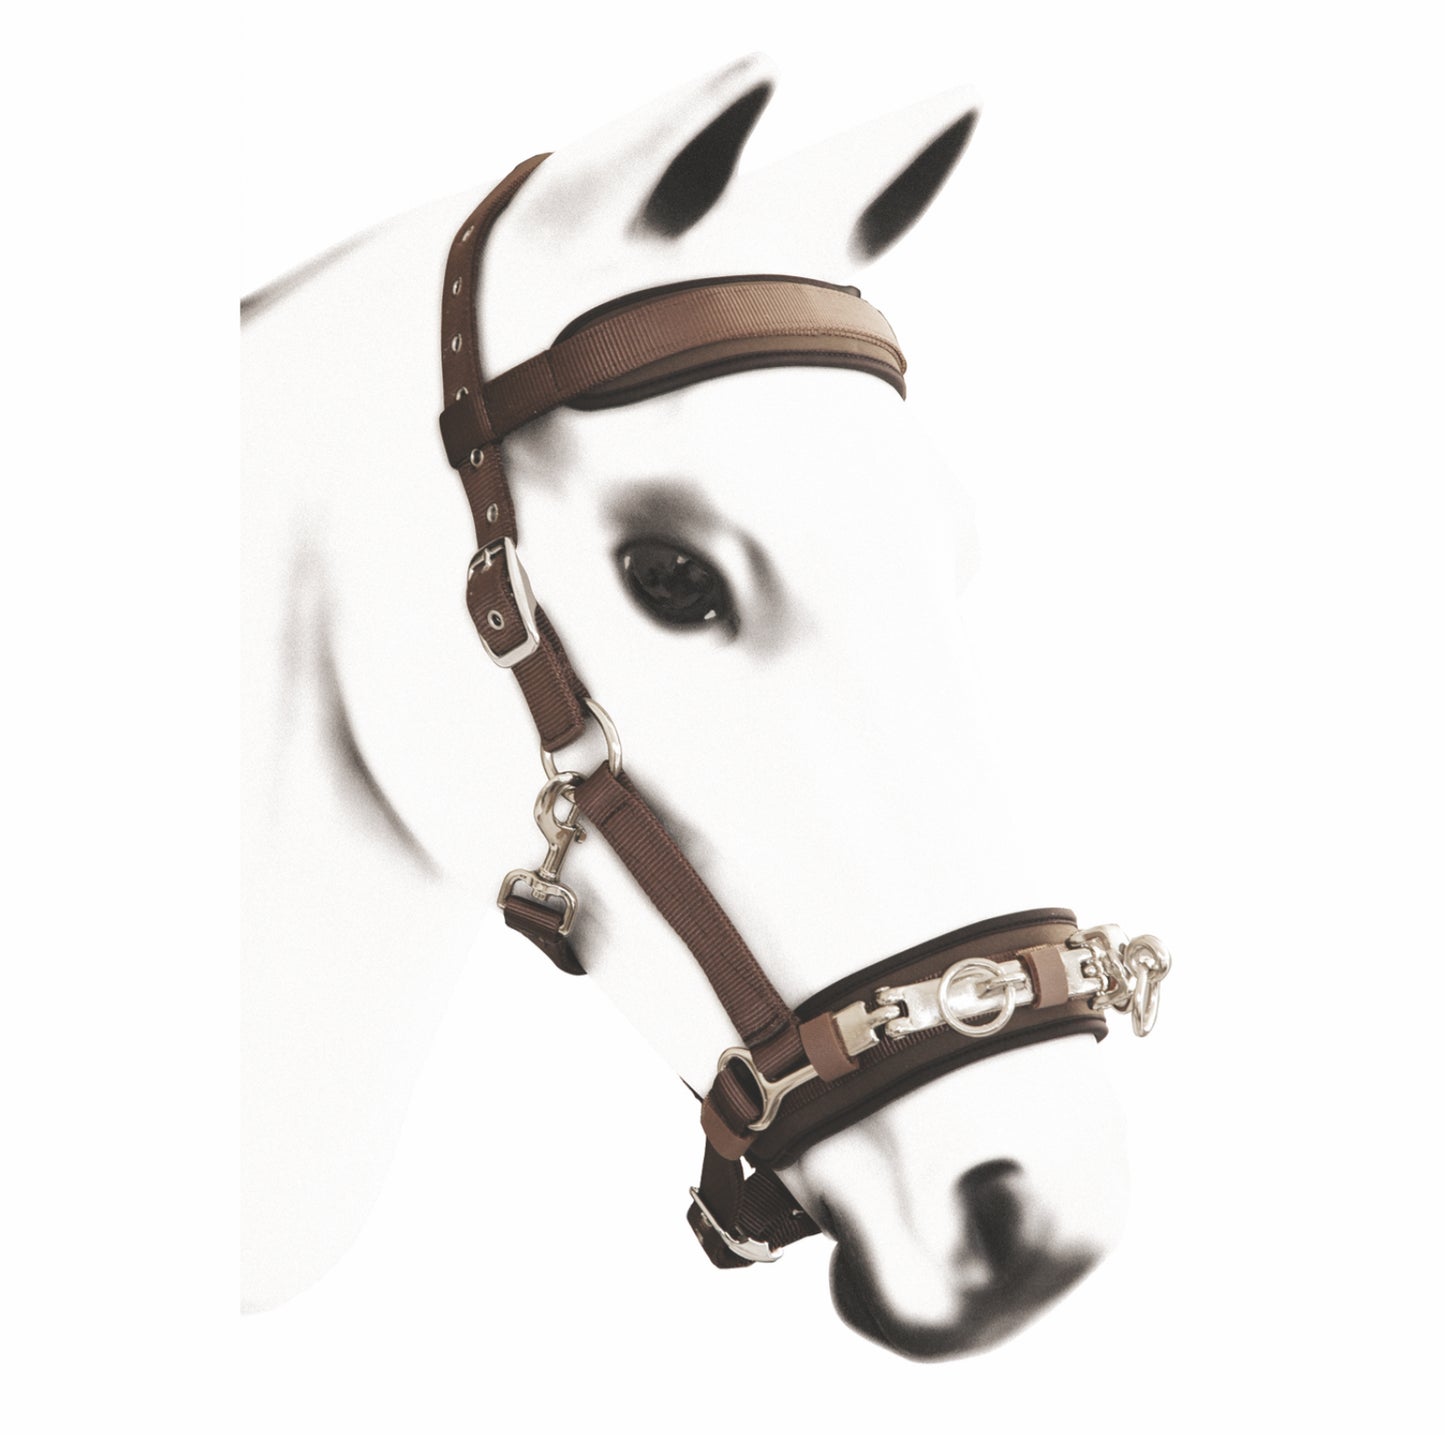 Cavezzone Doma Nylon | Umbria Equitazione | El gaucho sport